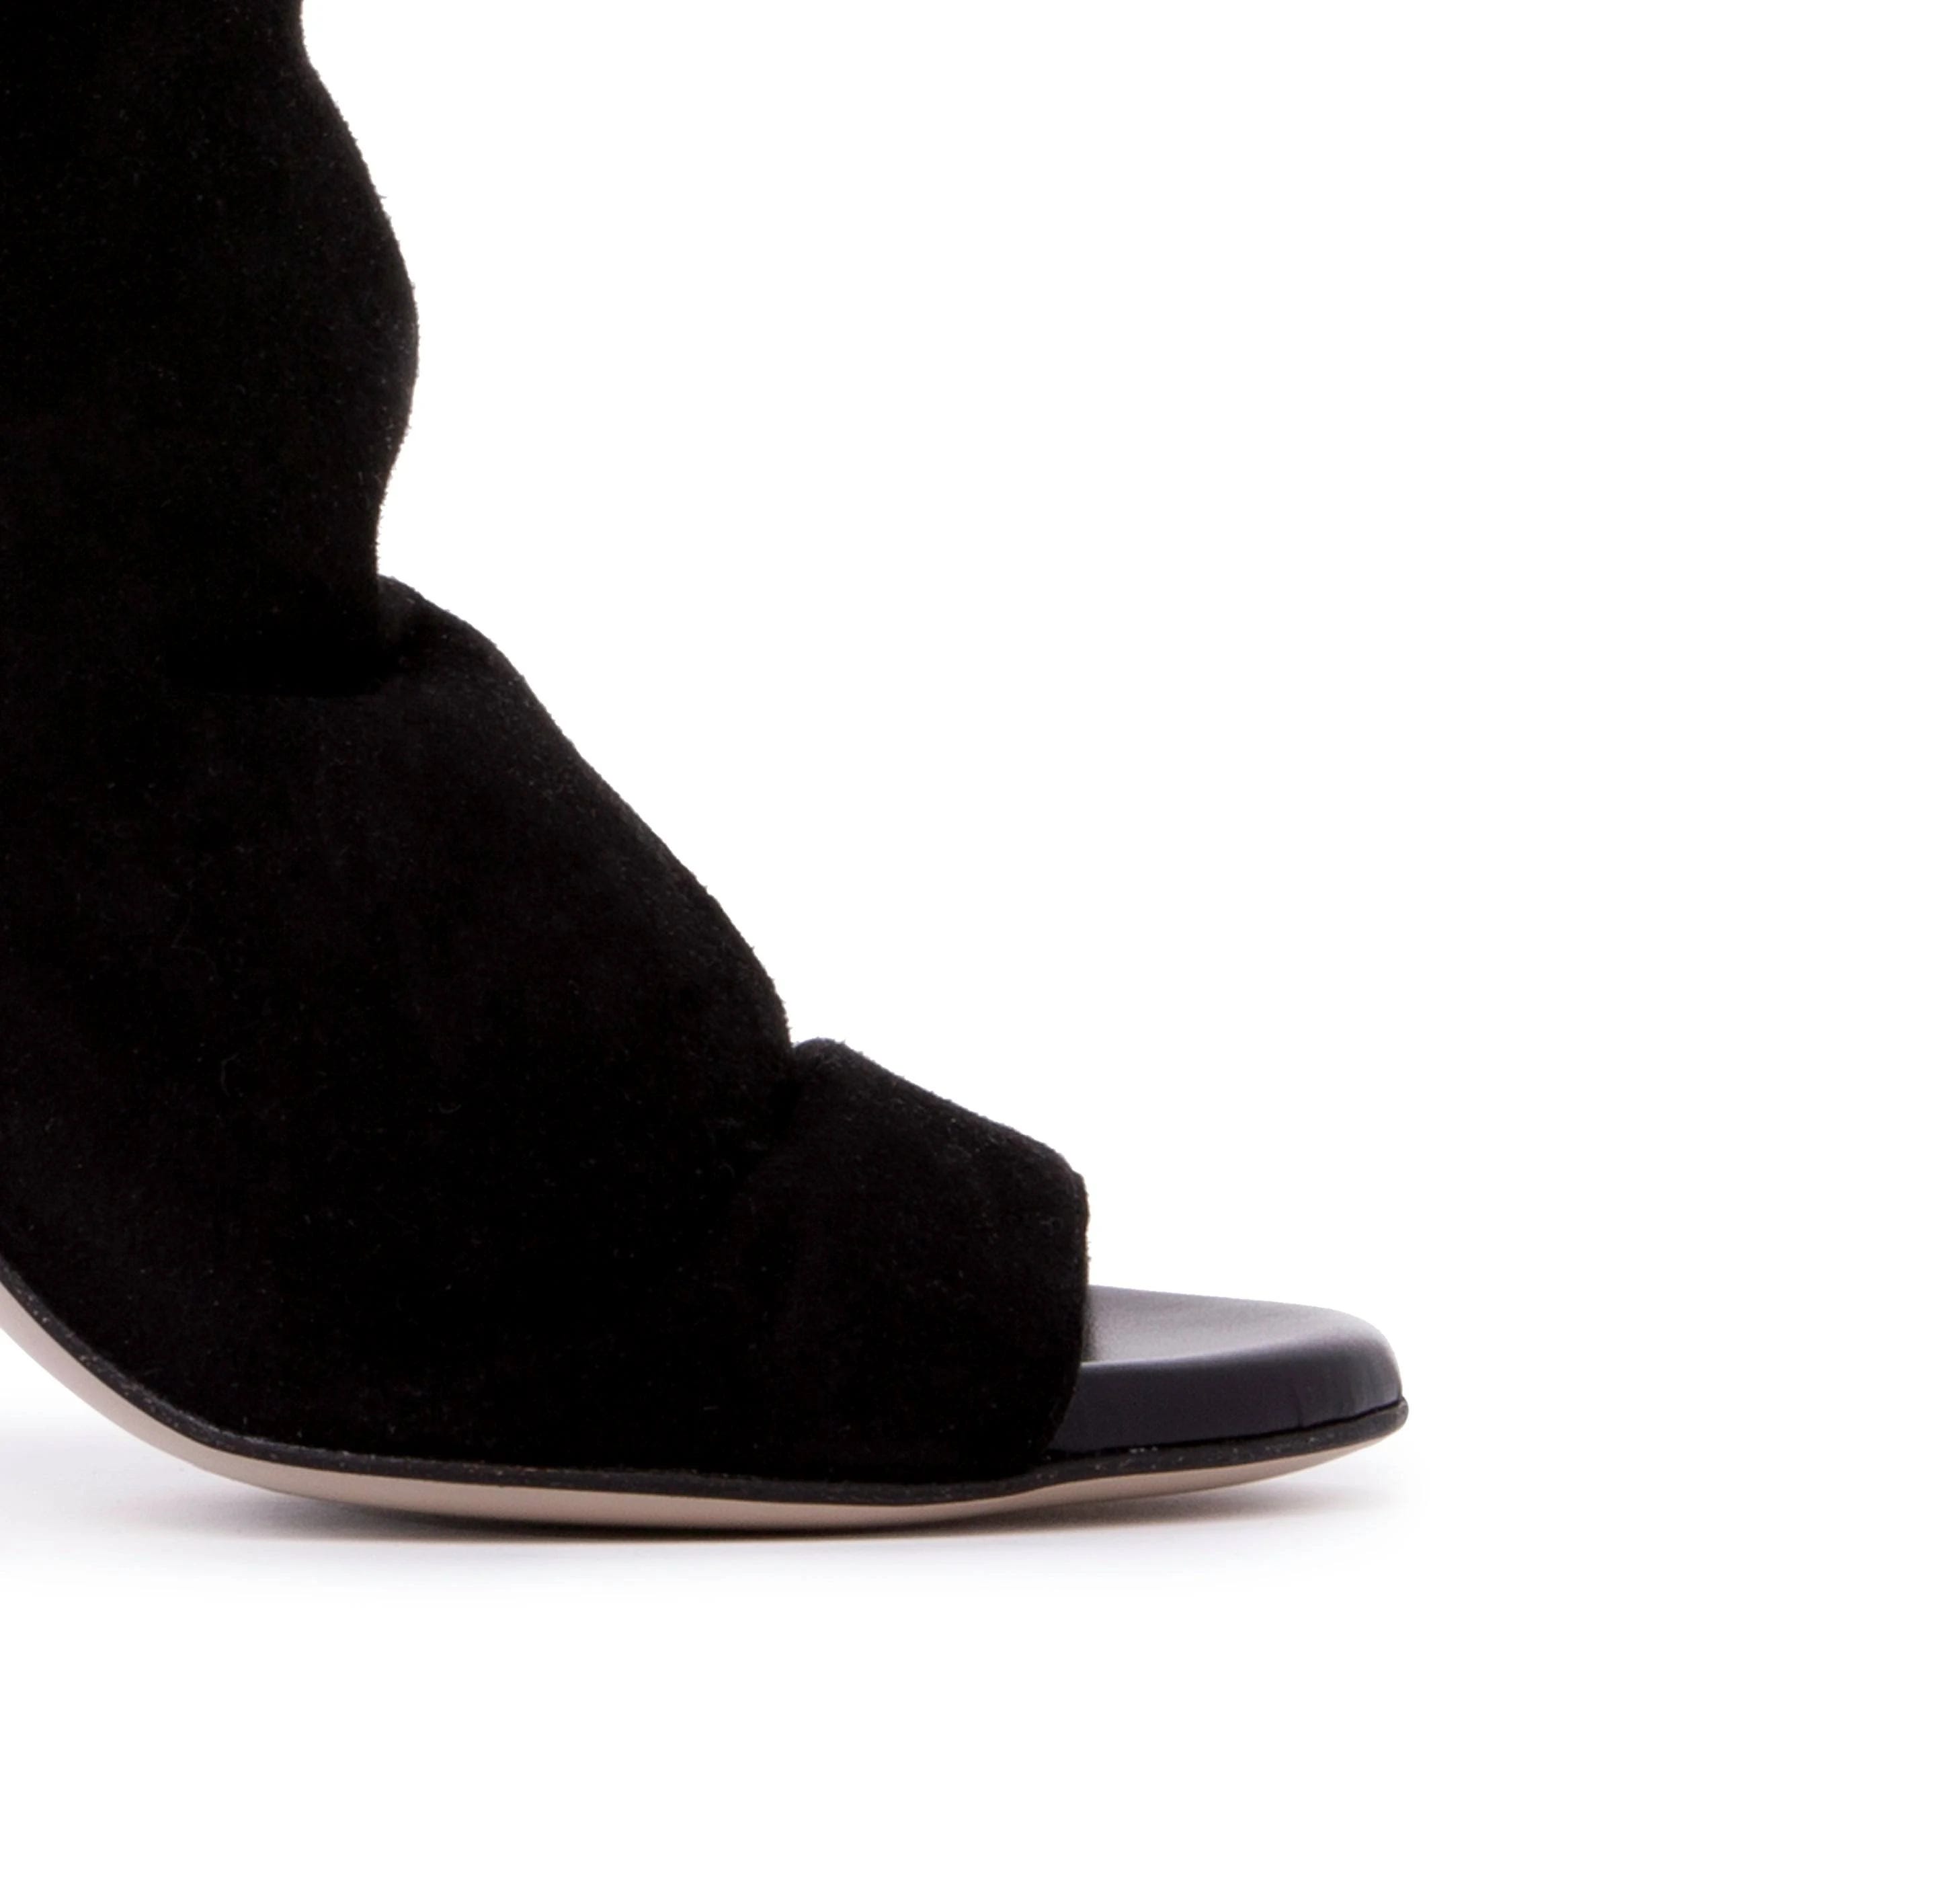 Stylish Italian Made Open Toe Bootie with Block Heel | Image